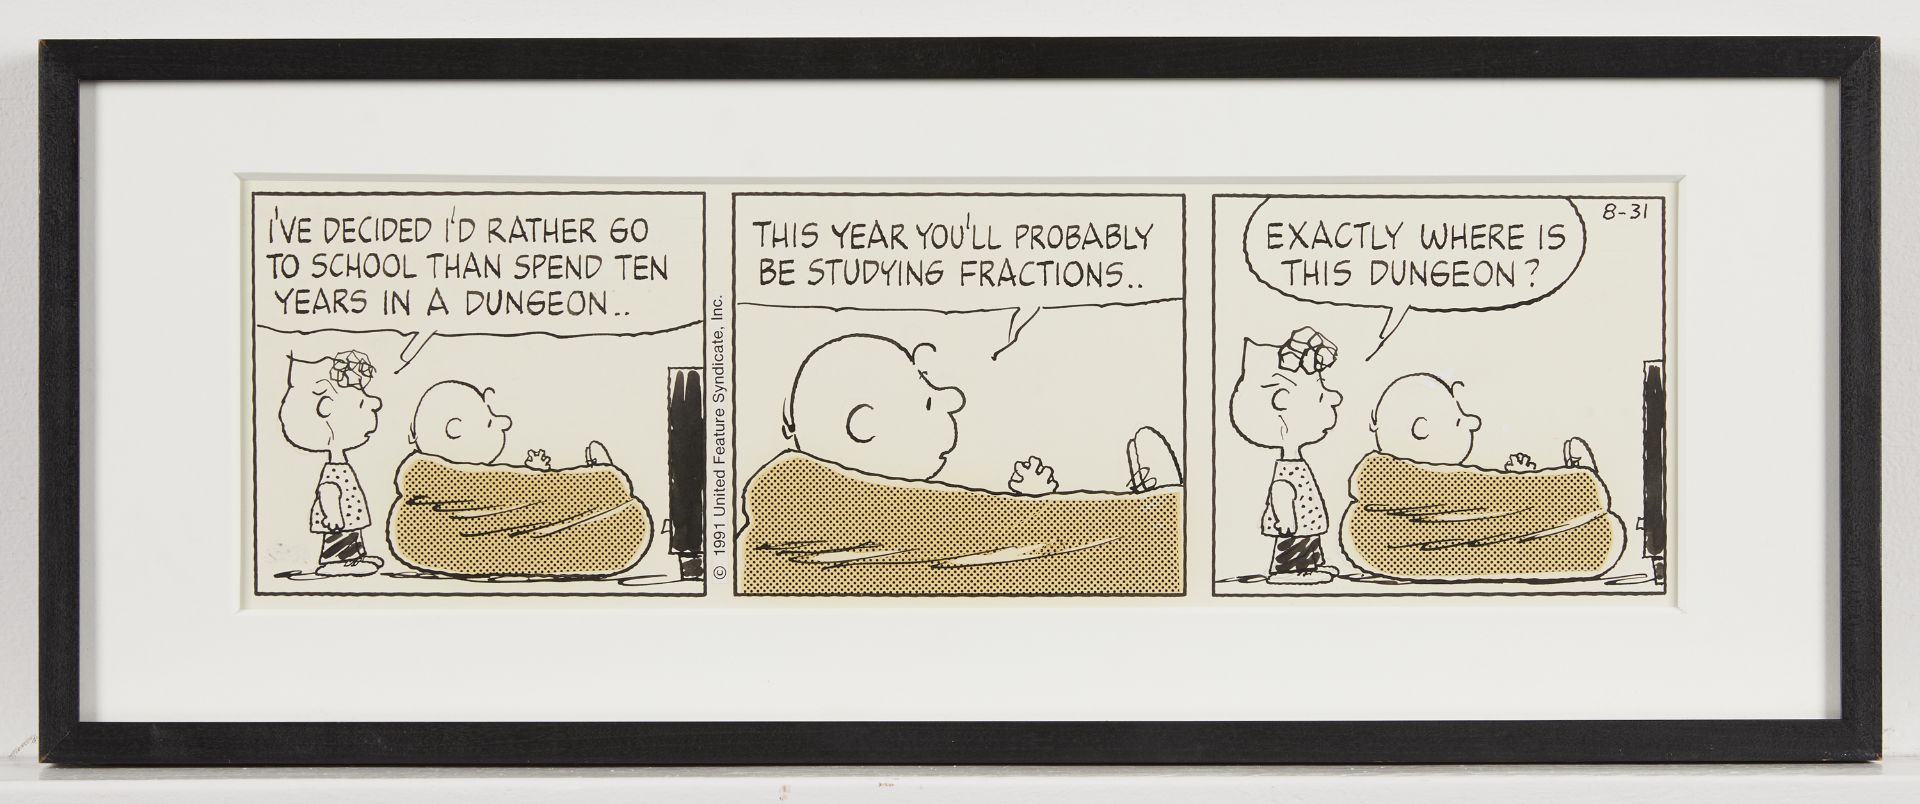 Charles Schulz Original Peanuts Comic Strip 1991 - Image 3 of 9